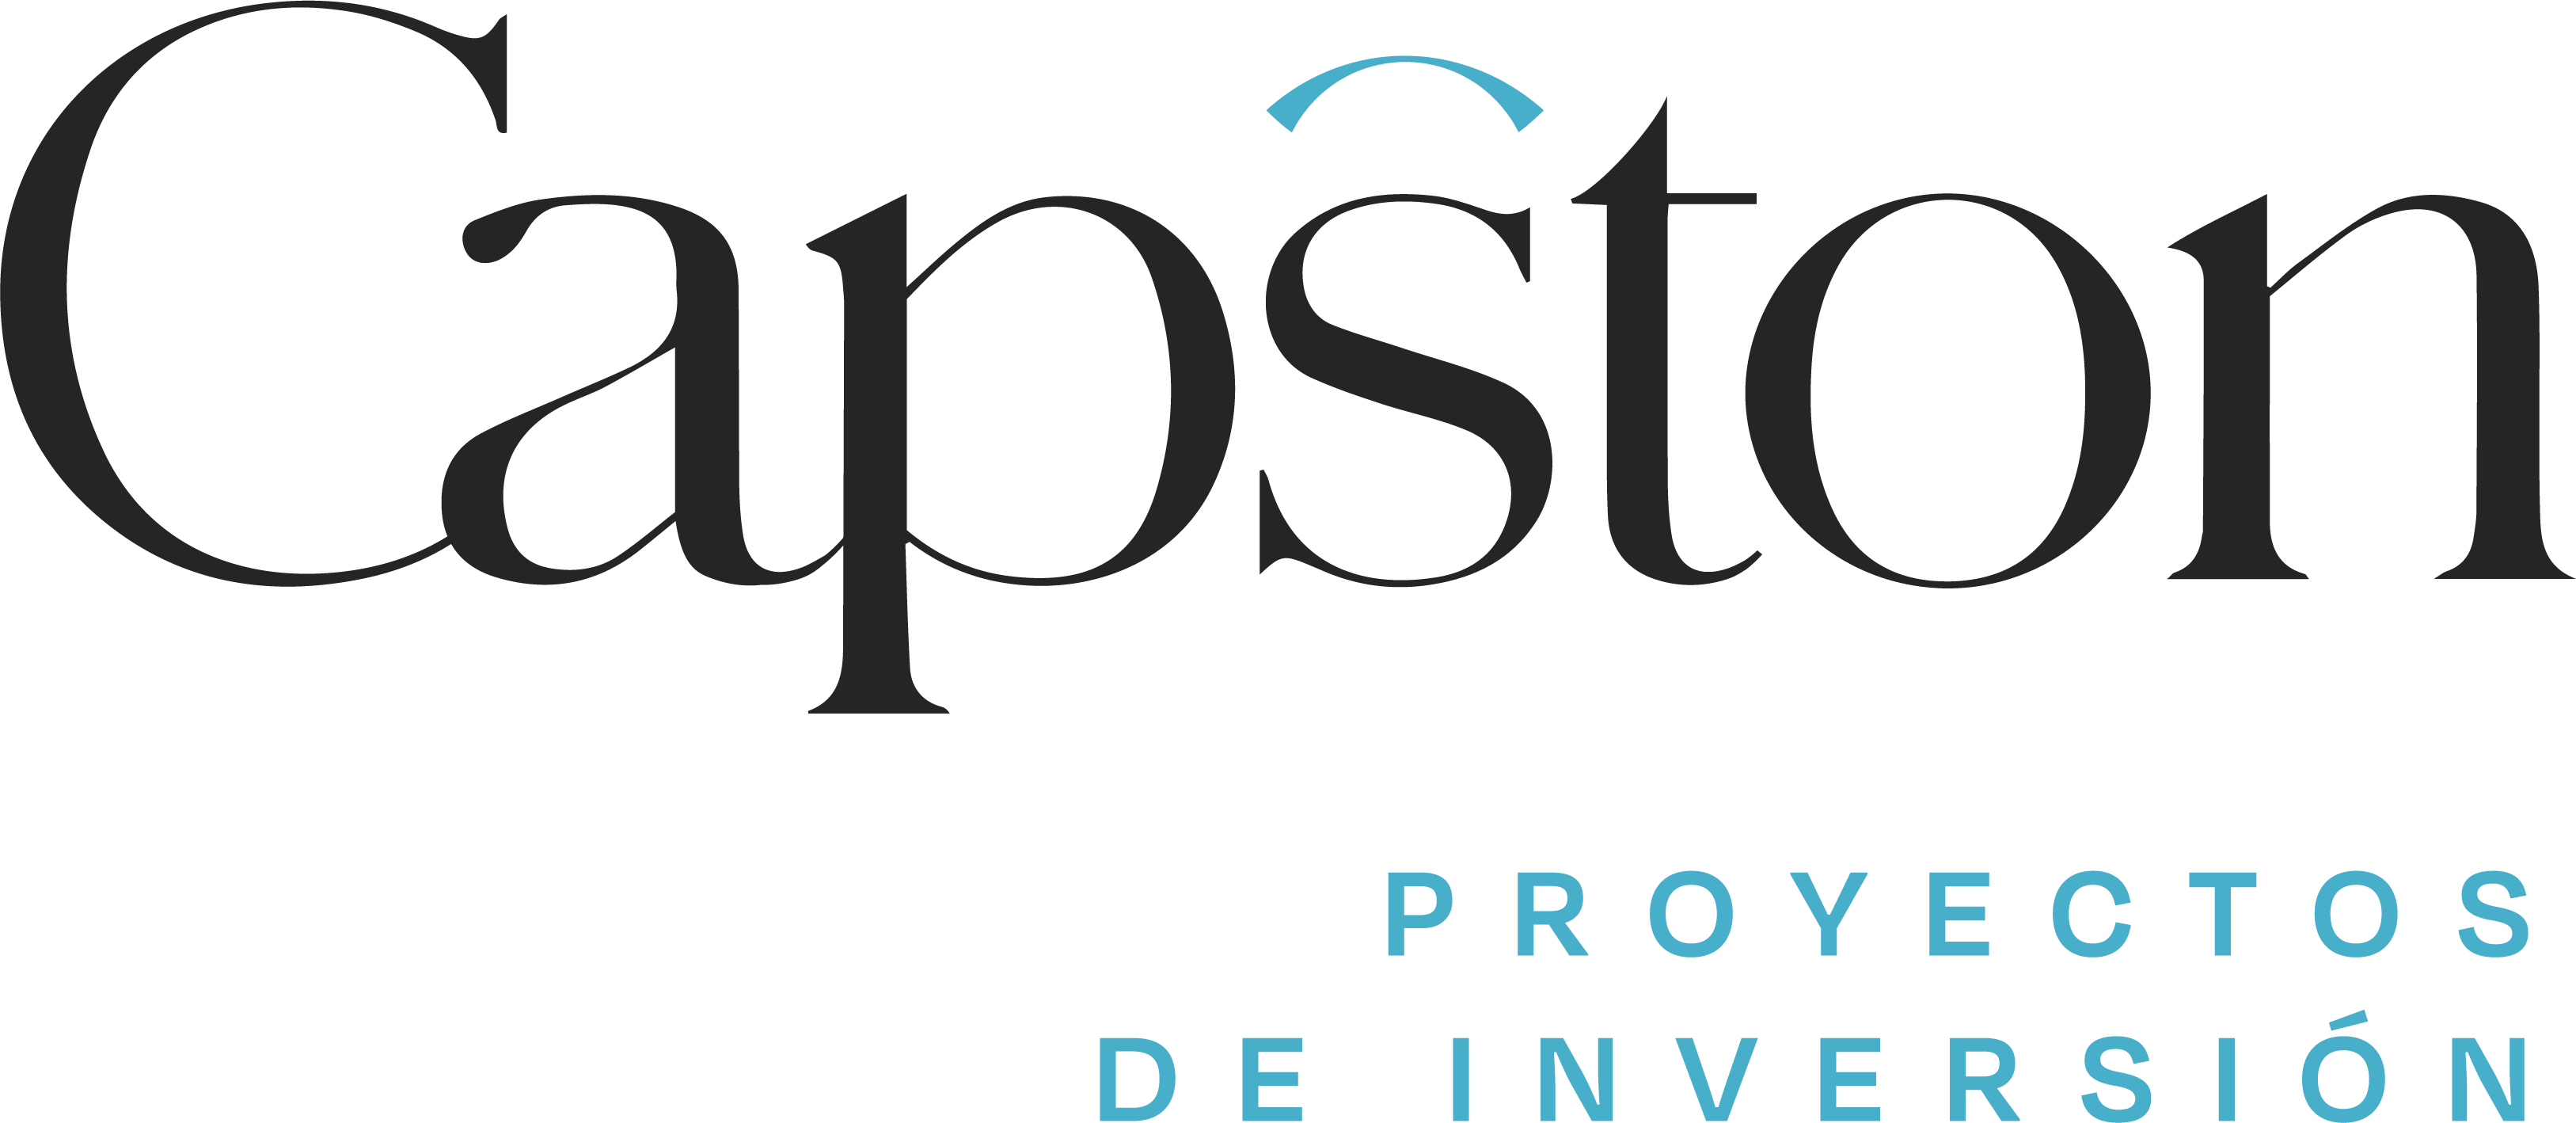 Logo Capston Proyectos de Inversión